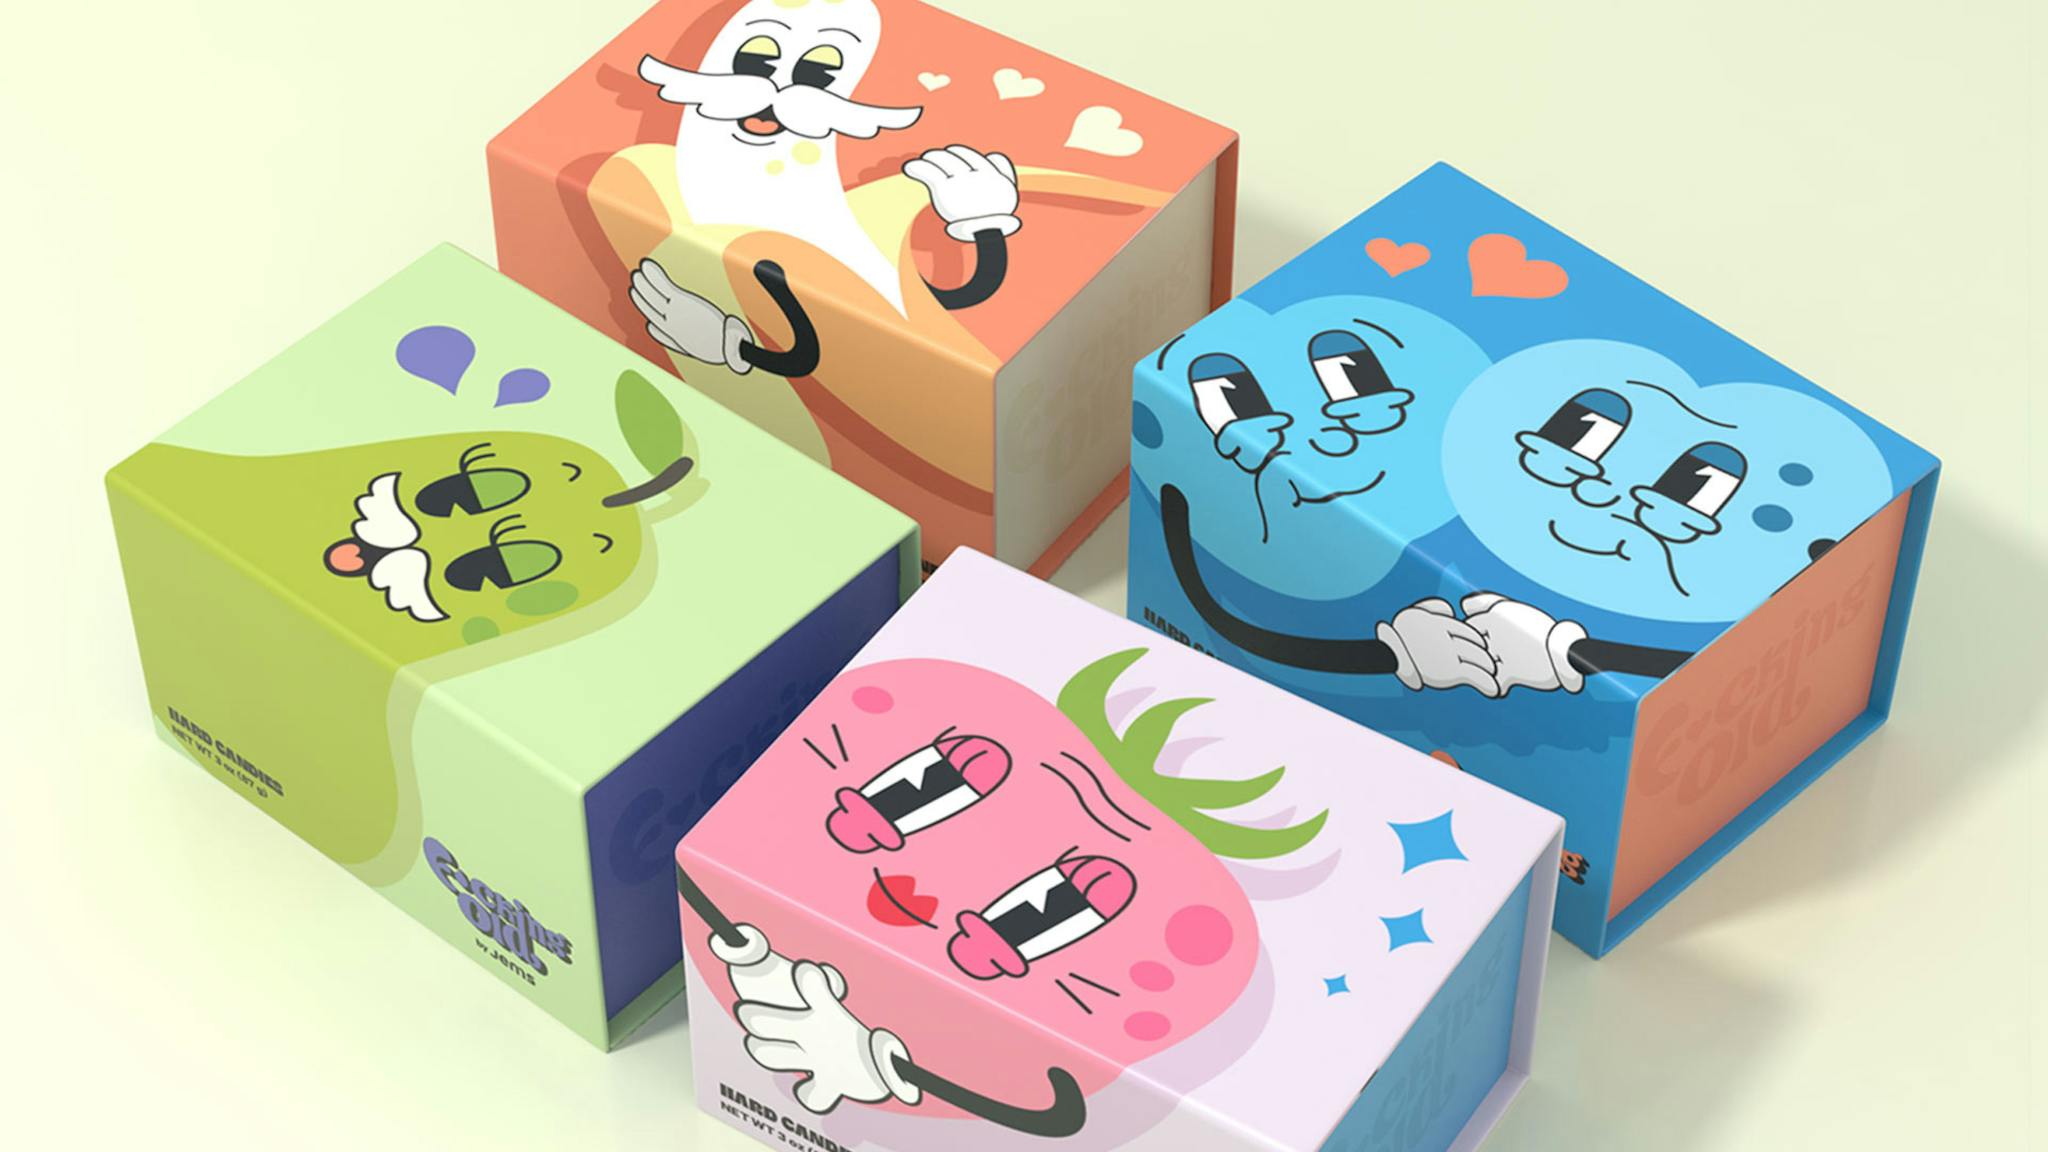 Dentsu Creative x Jems for All, 4 Box Designs